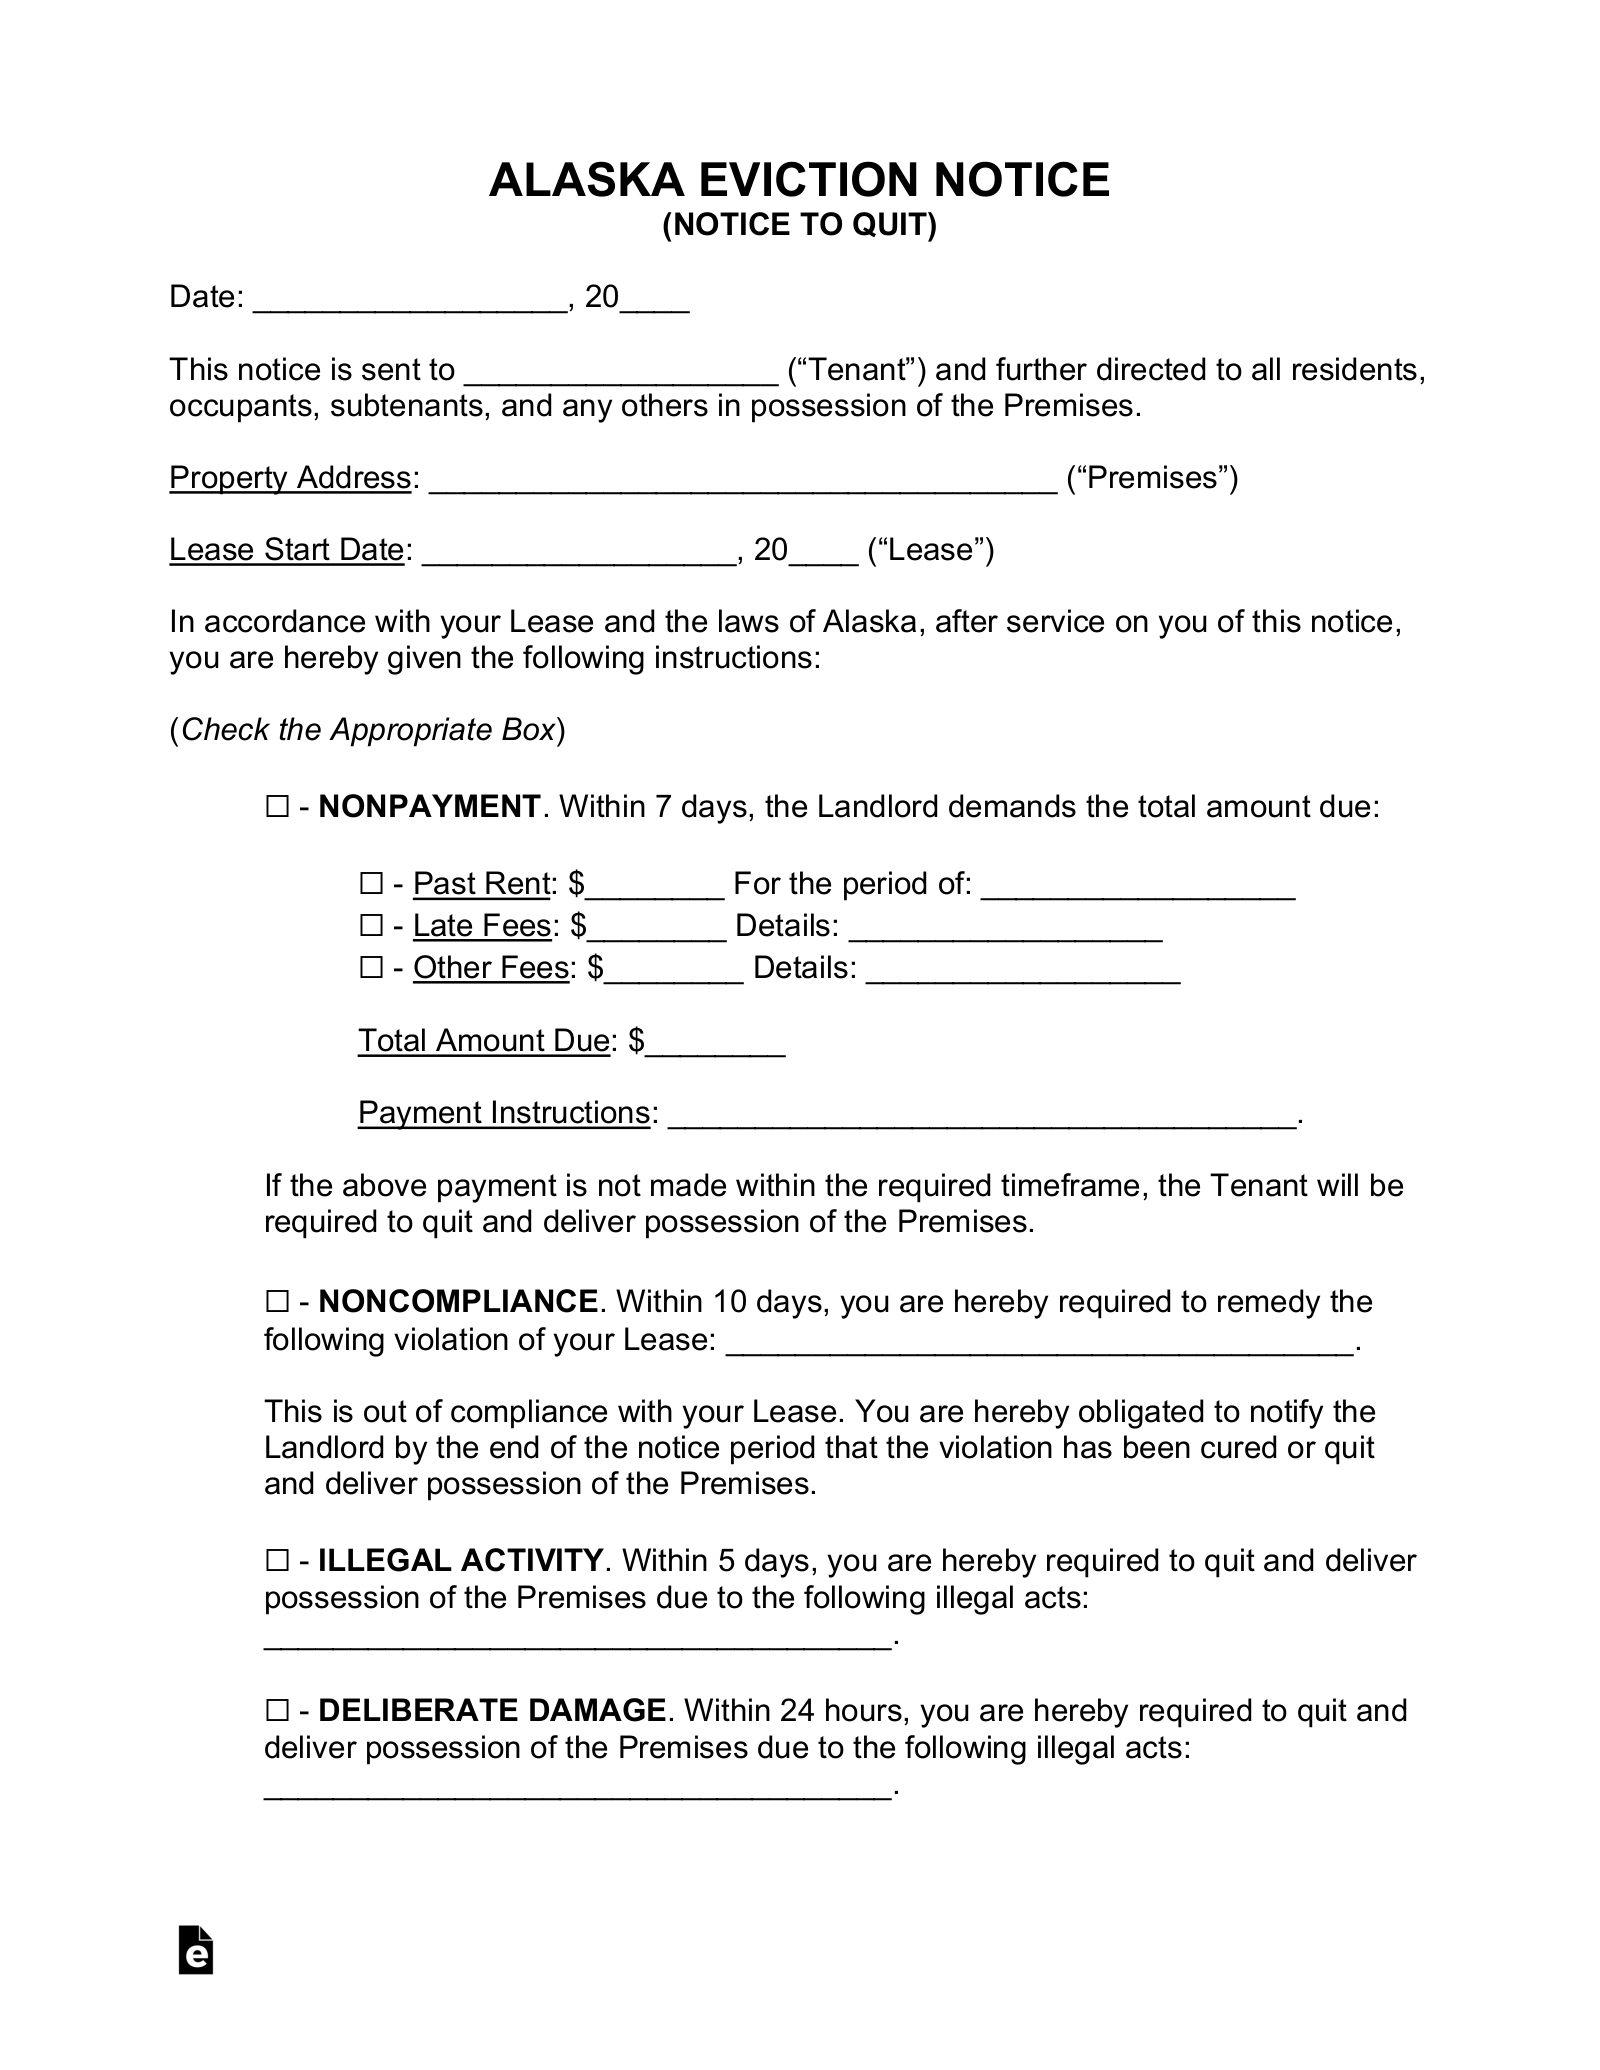 Alaska Eviction Notice Forms (5)